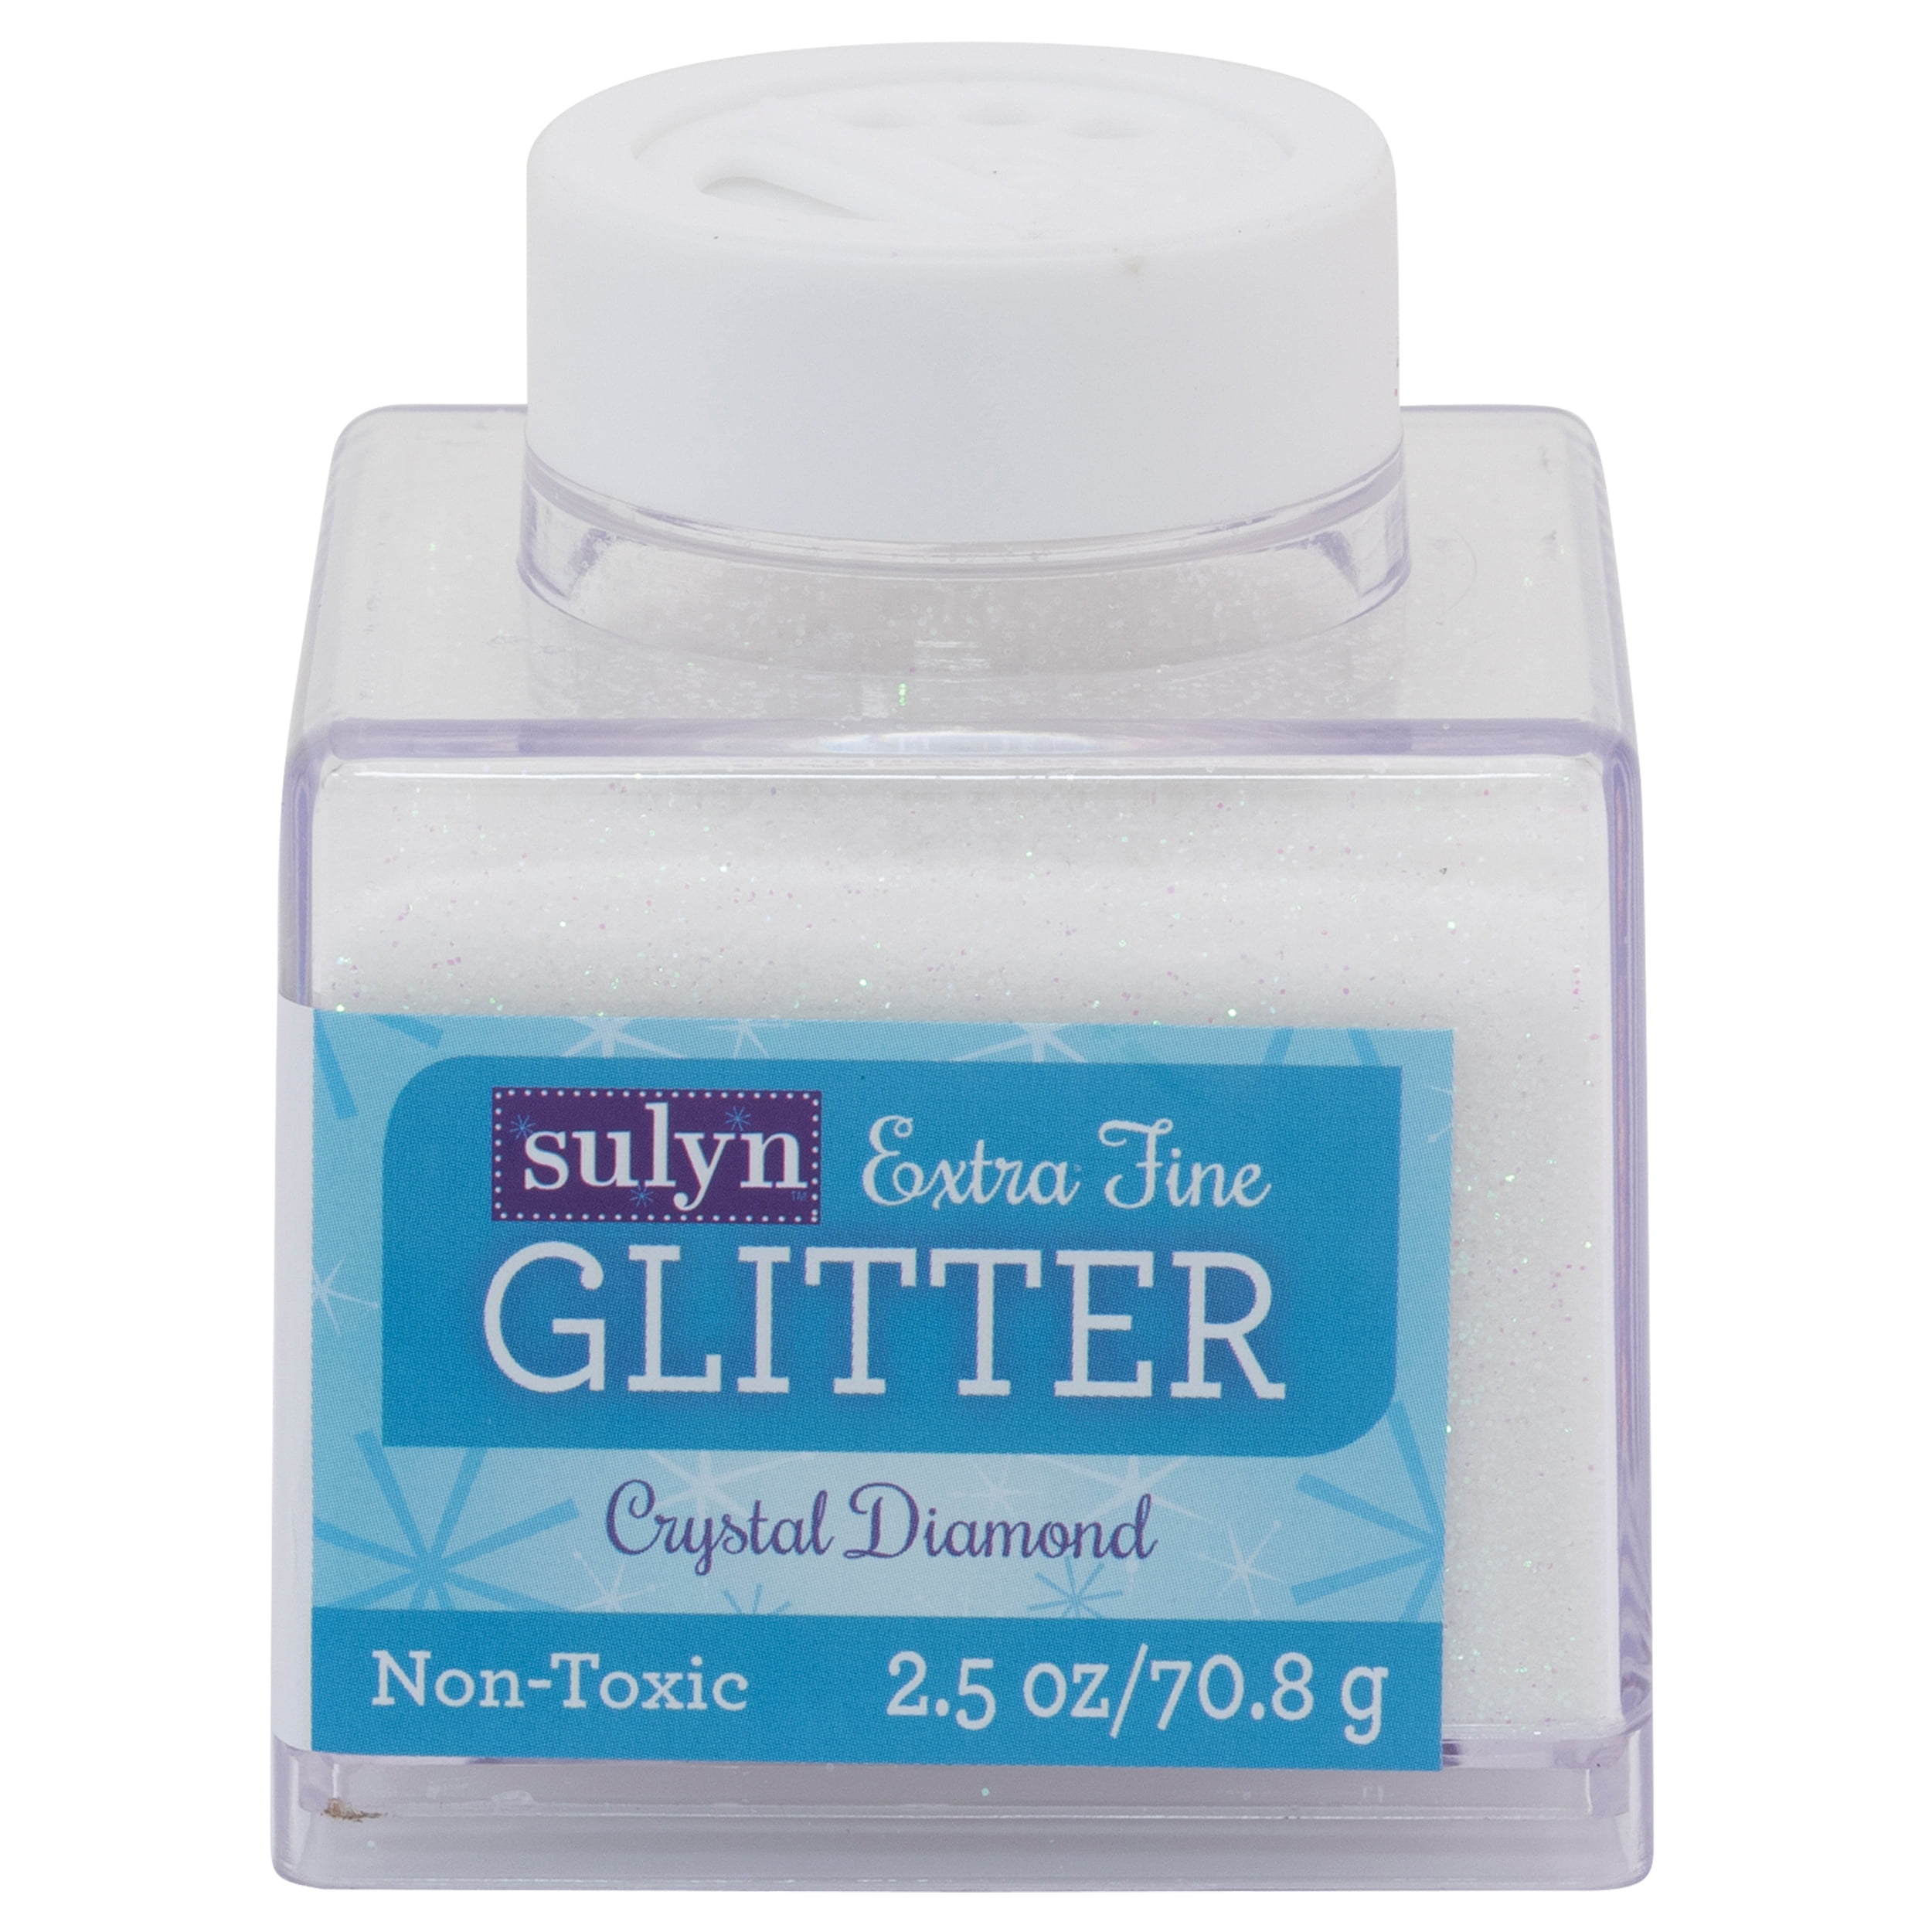 Moxy Extra Fine Glitter-White 1 oz+ Bottle –